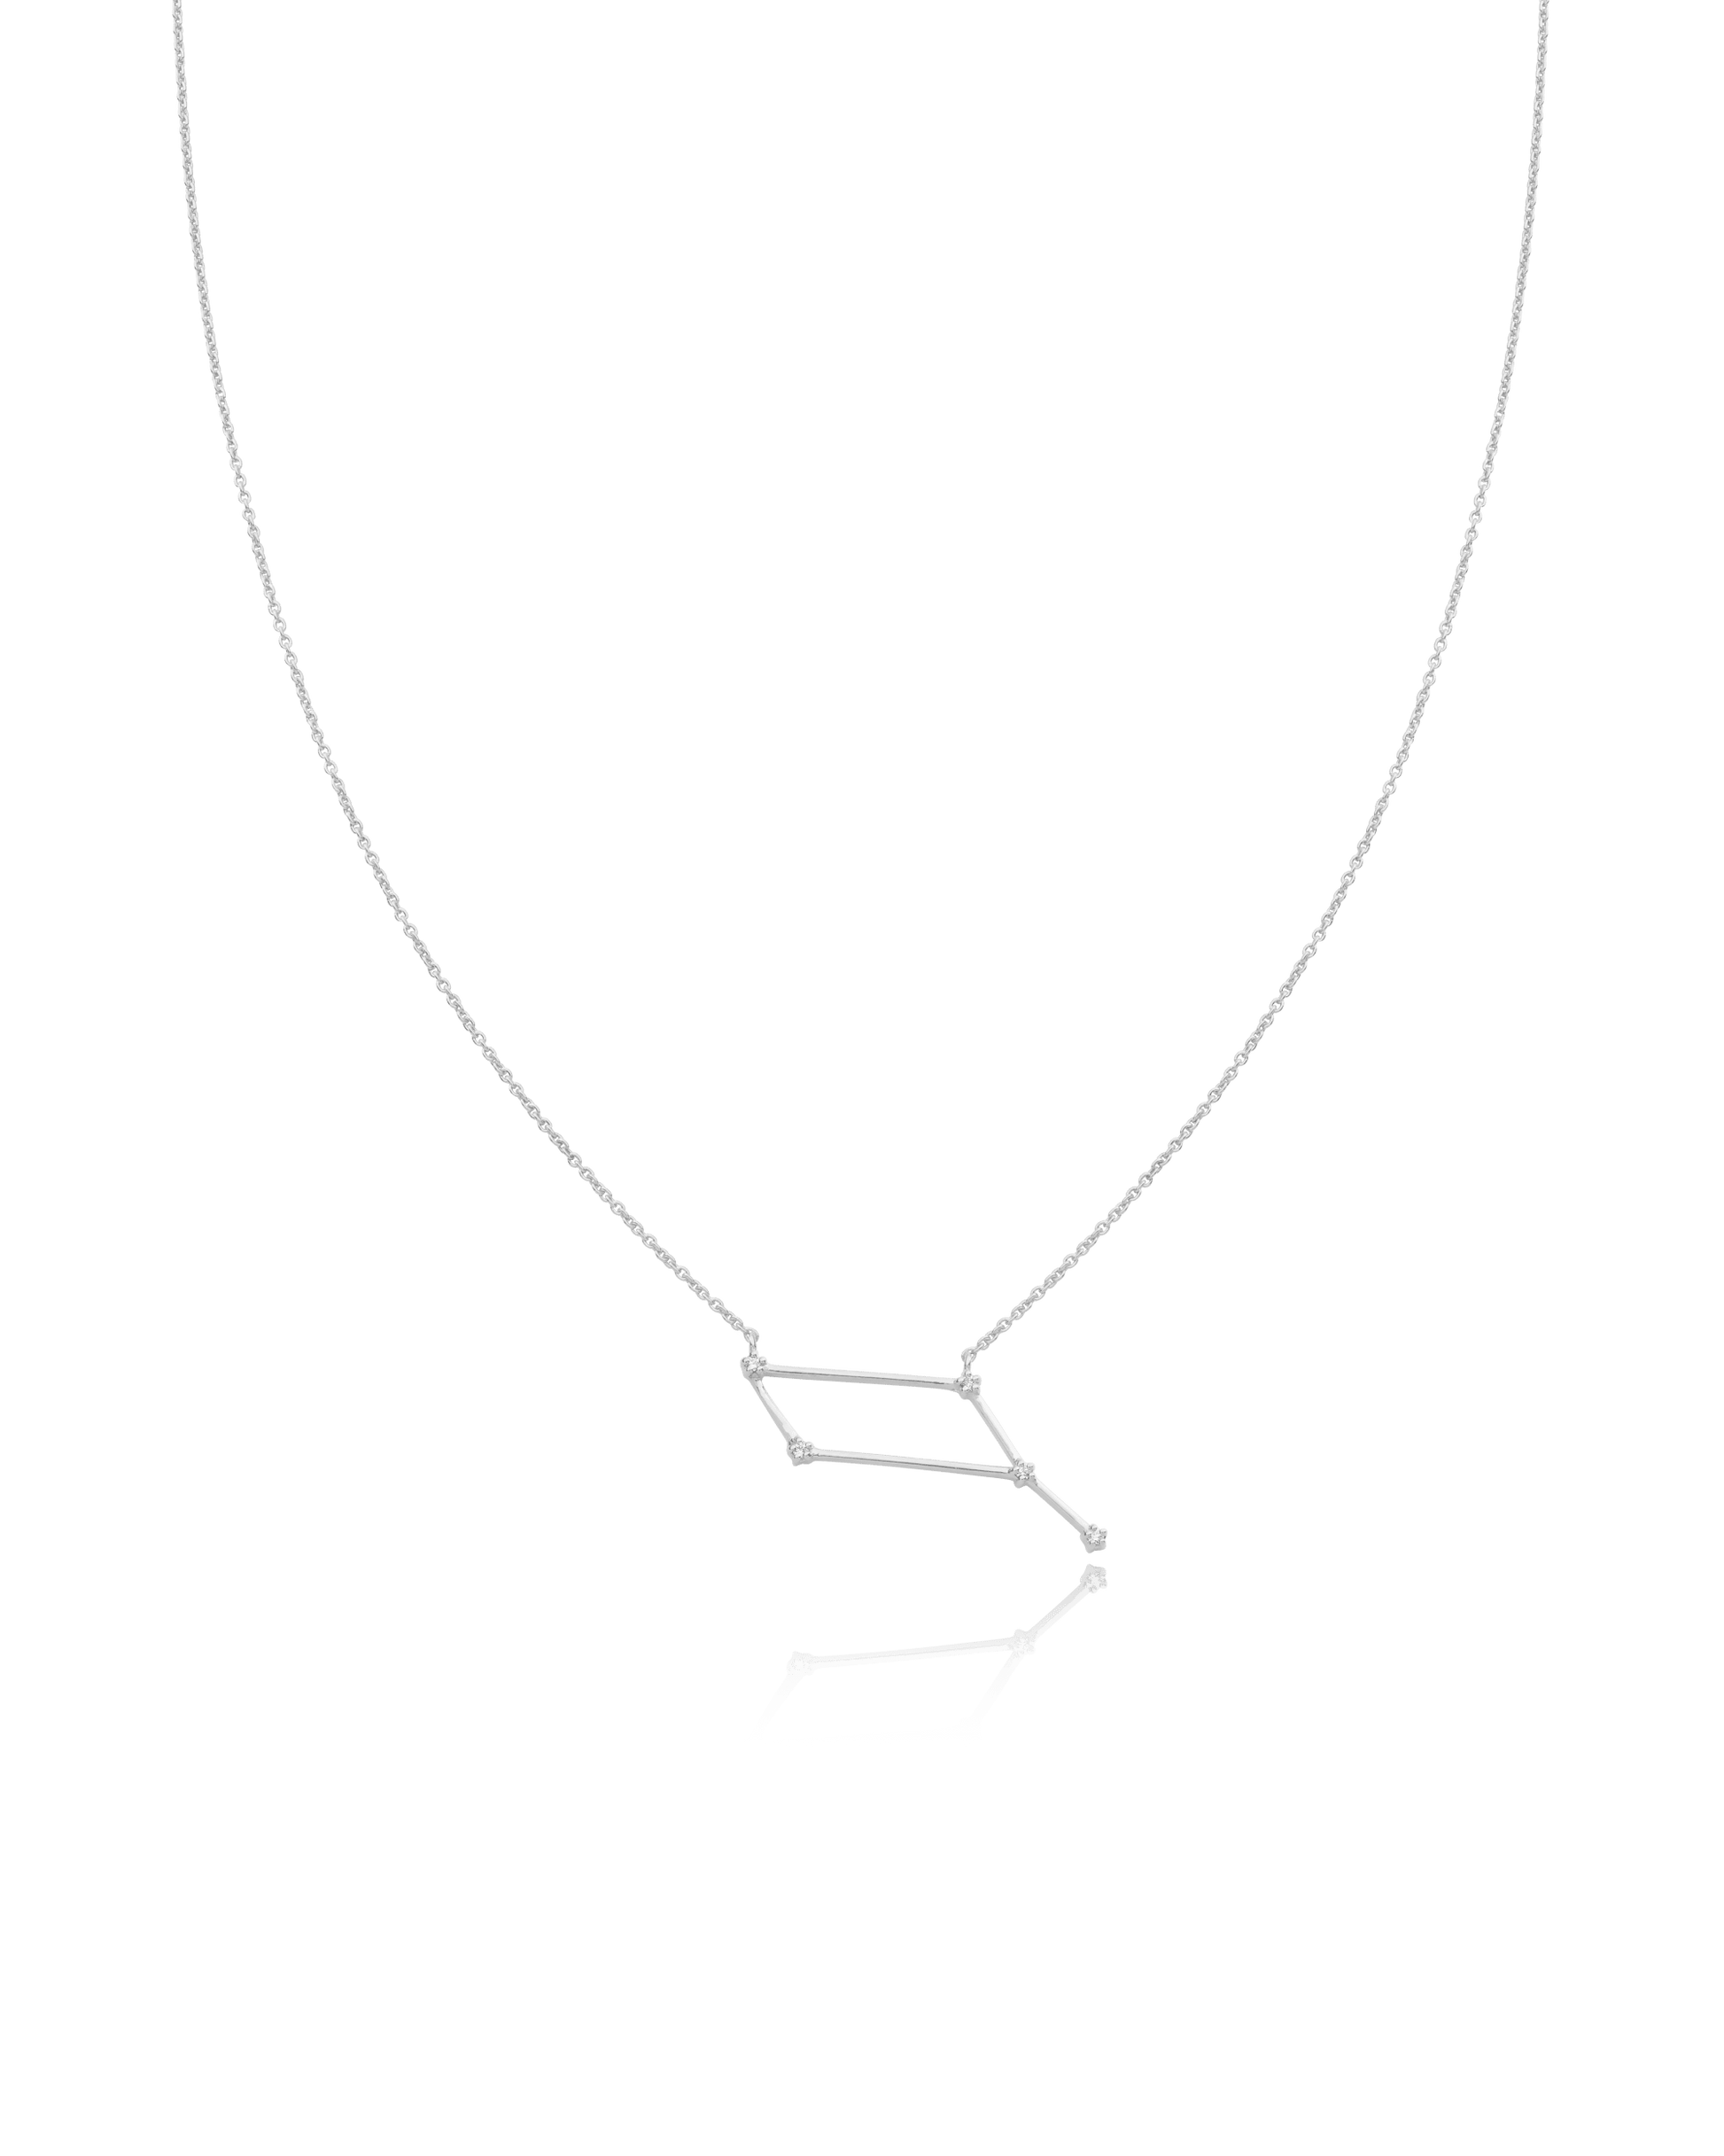 Ursa Major Constellation Necklace - 925 Sterling Silver Necklaces magal-dev Lyra 16" 